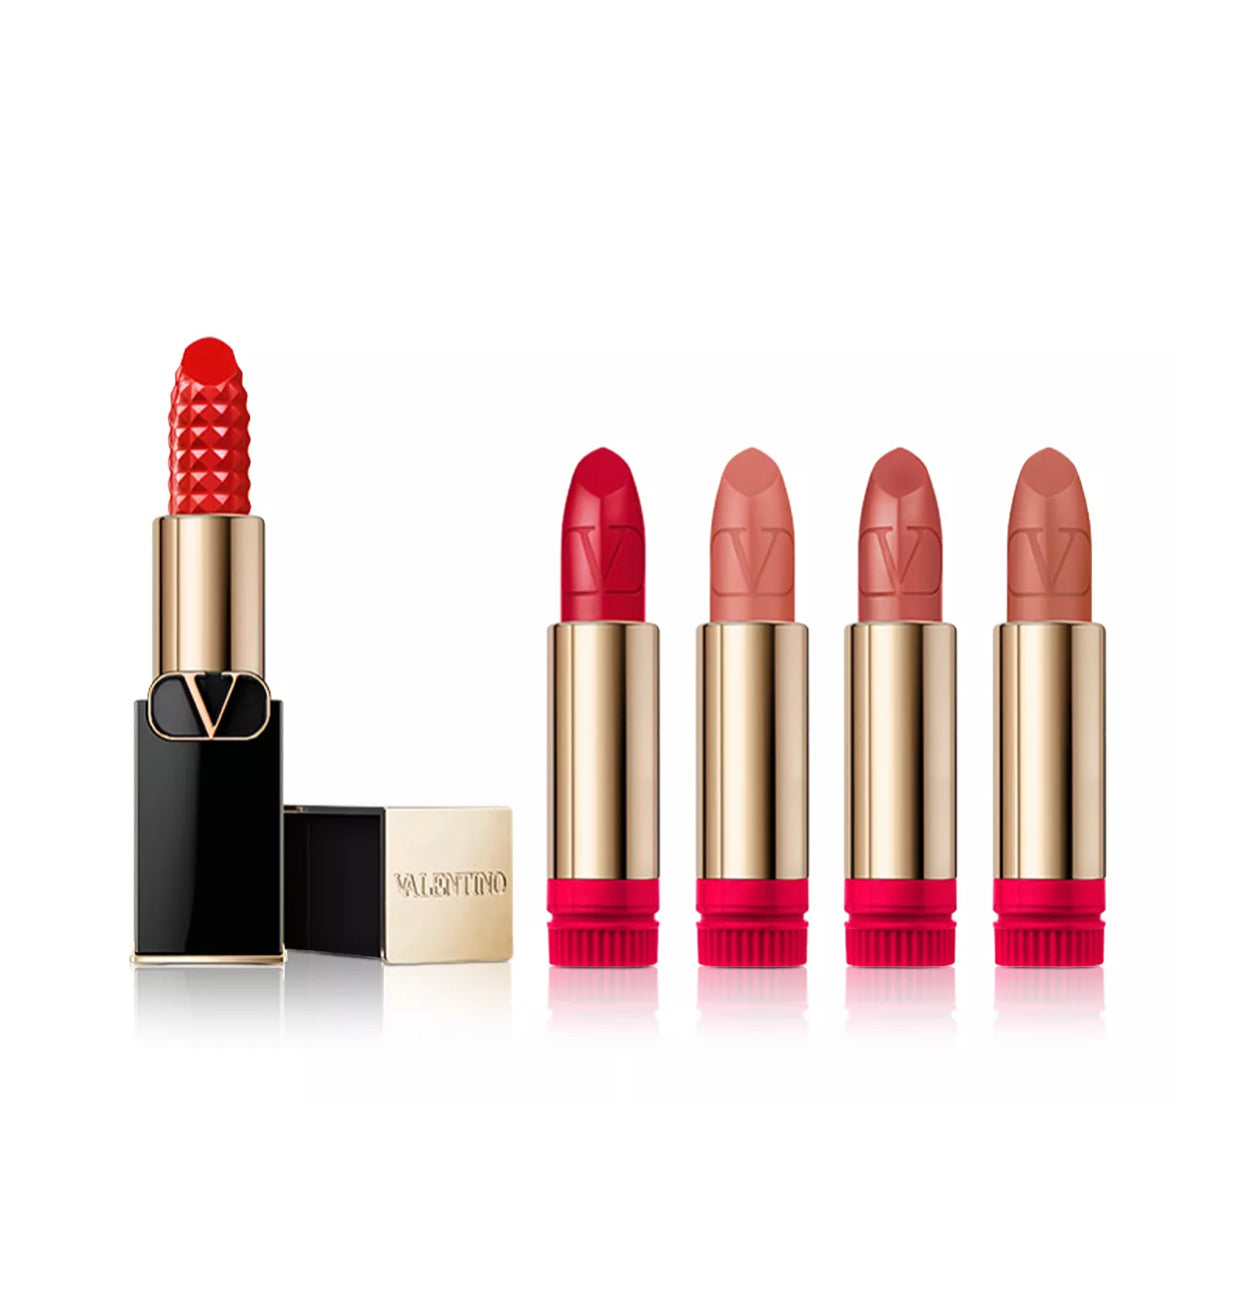 Valentino Luxury Compact & Lipstick Gift Set